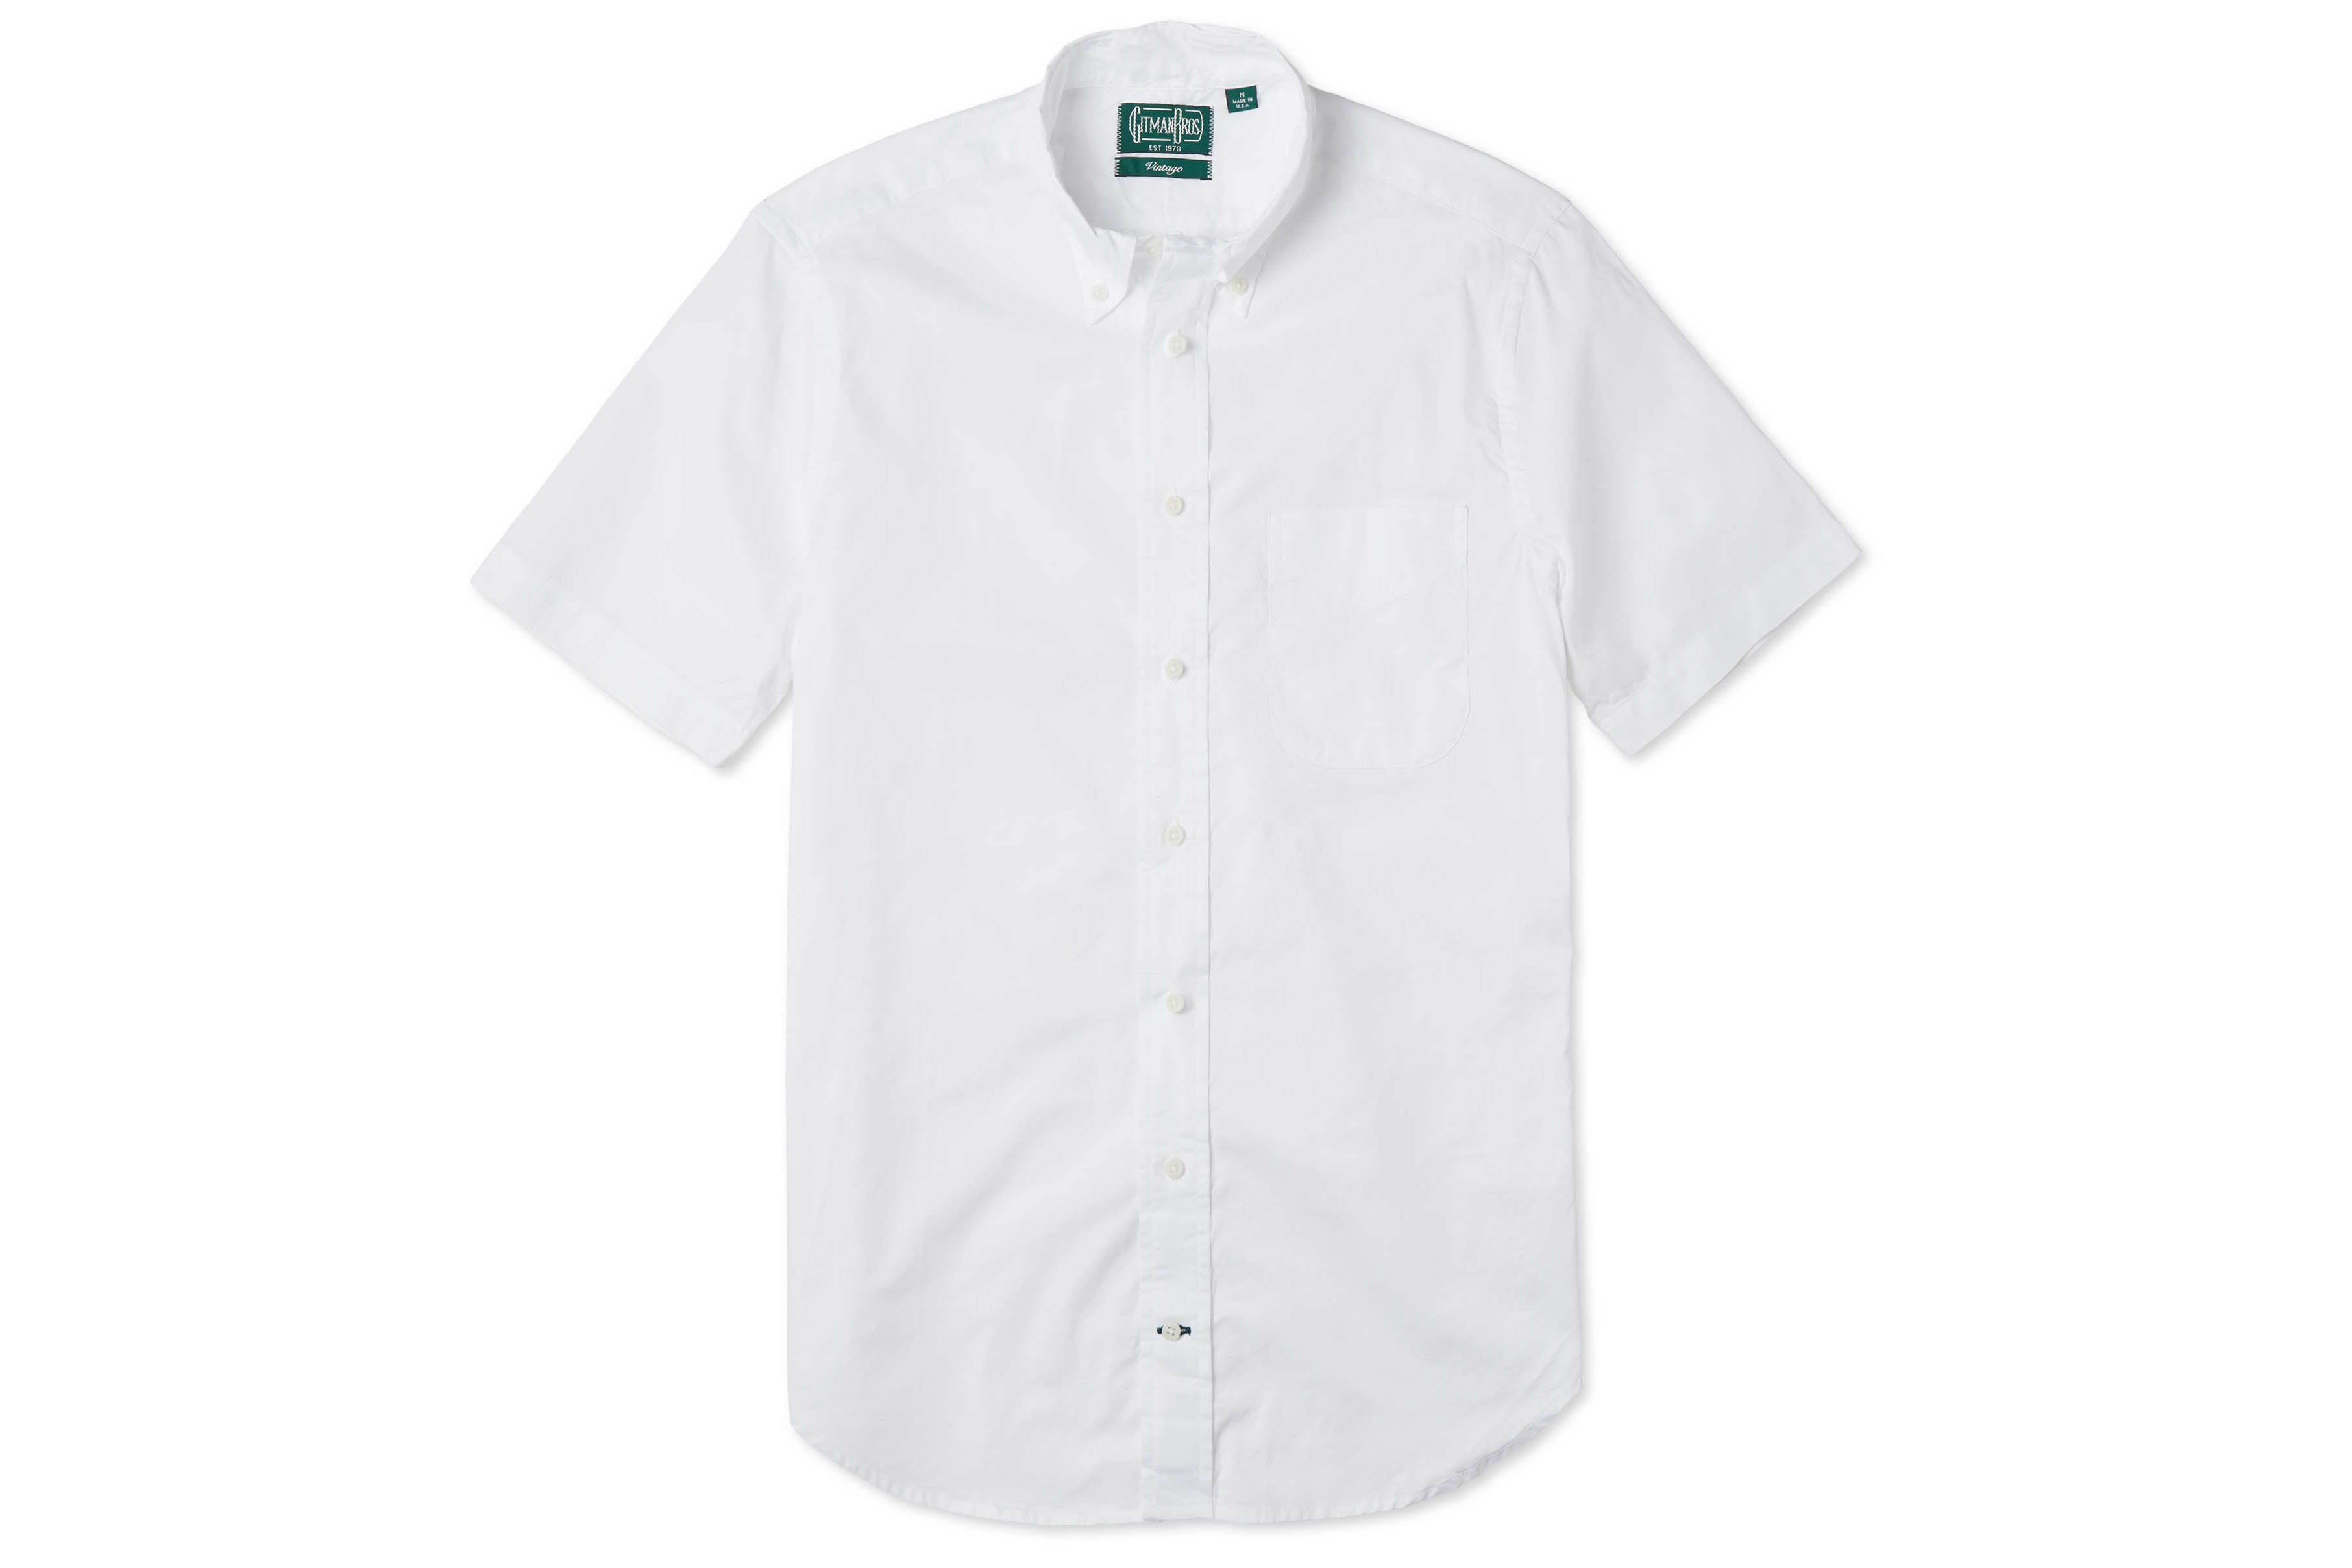 The Best White Dress Shirts for Men - Bloomberg